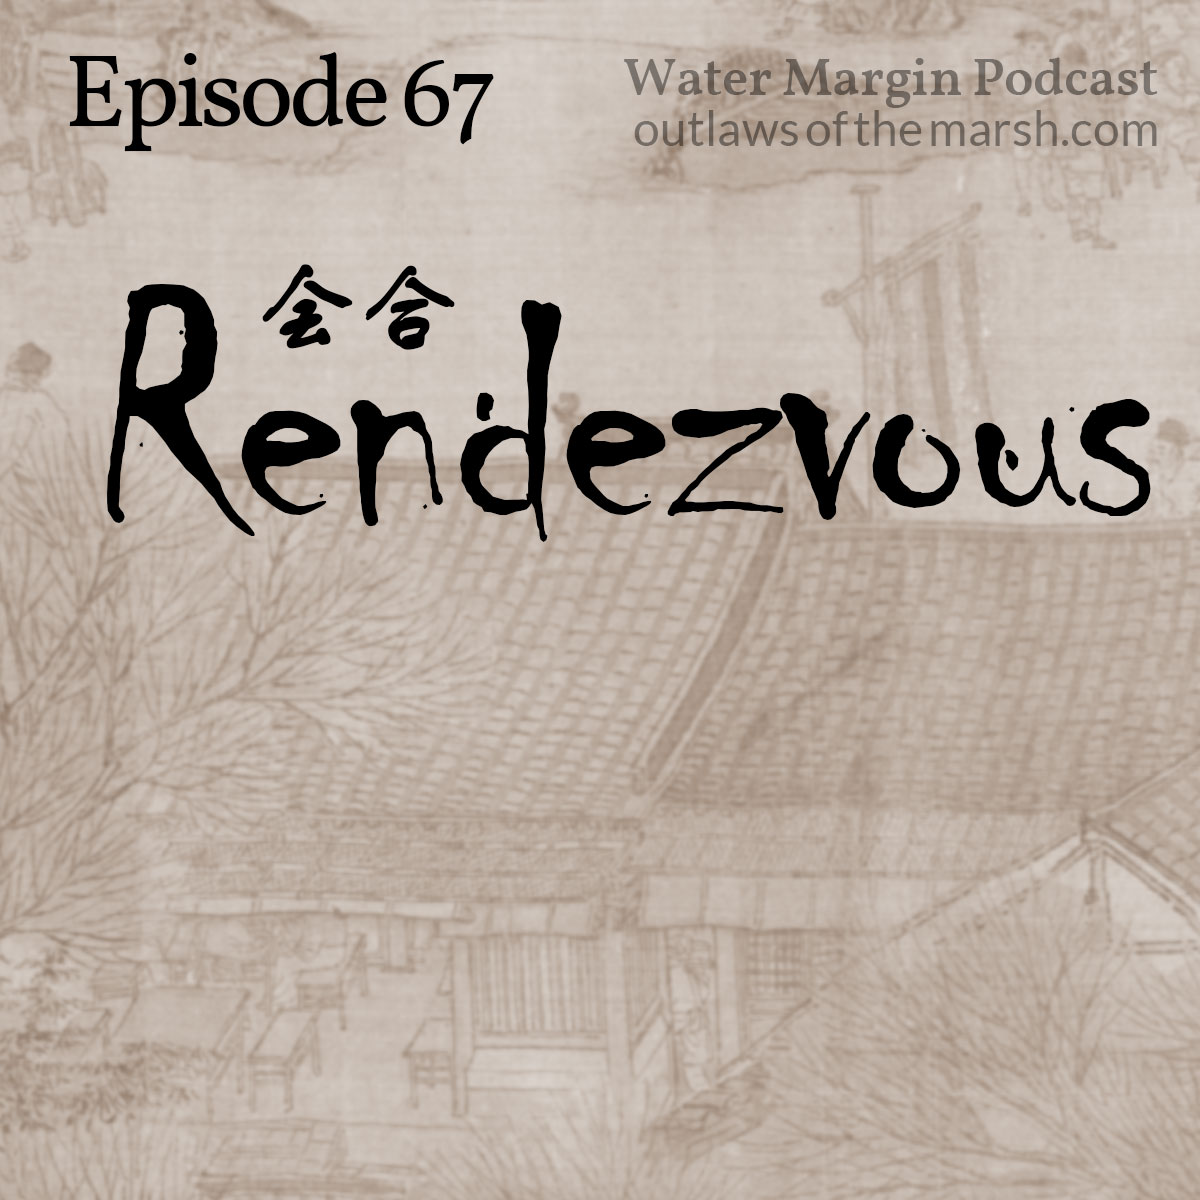 Water Margin Podcast: Episode 067